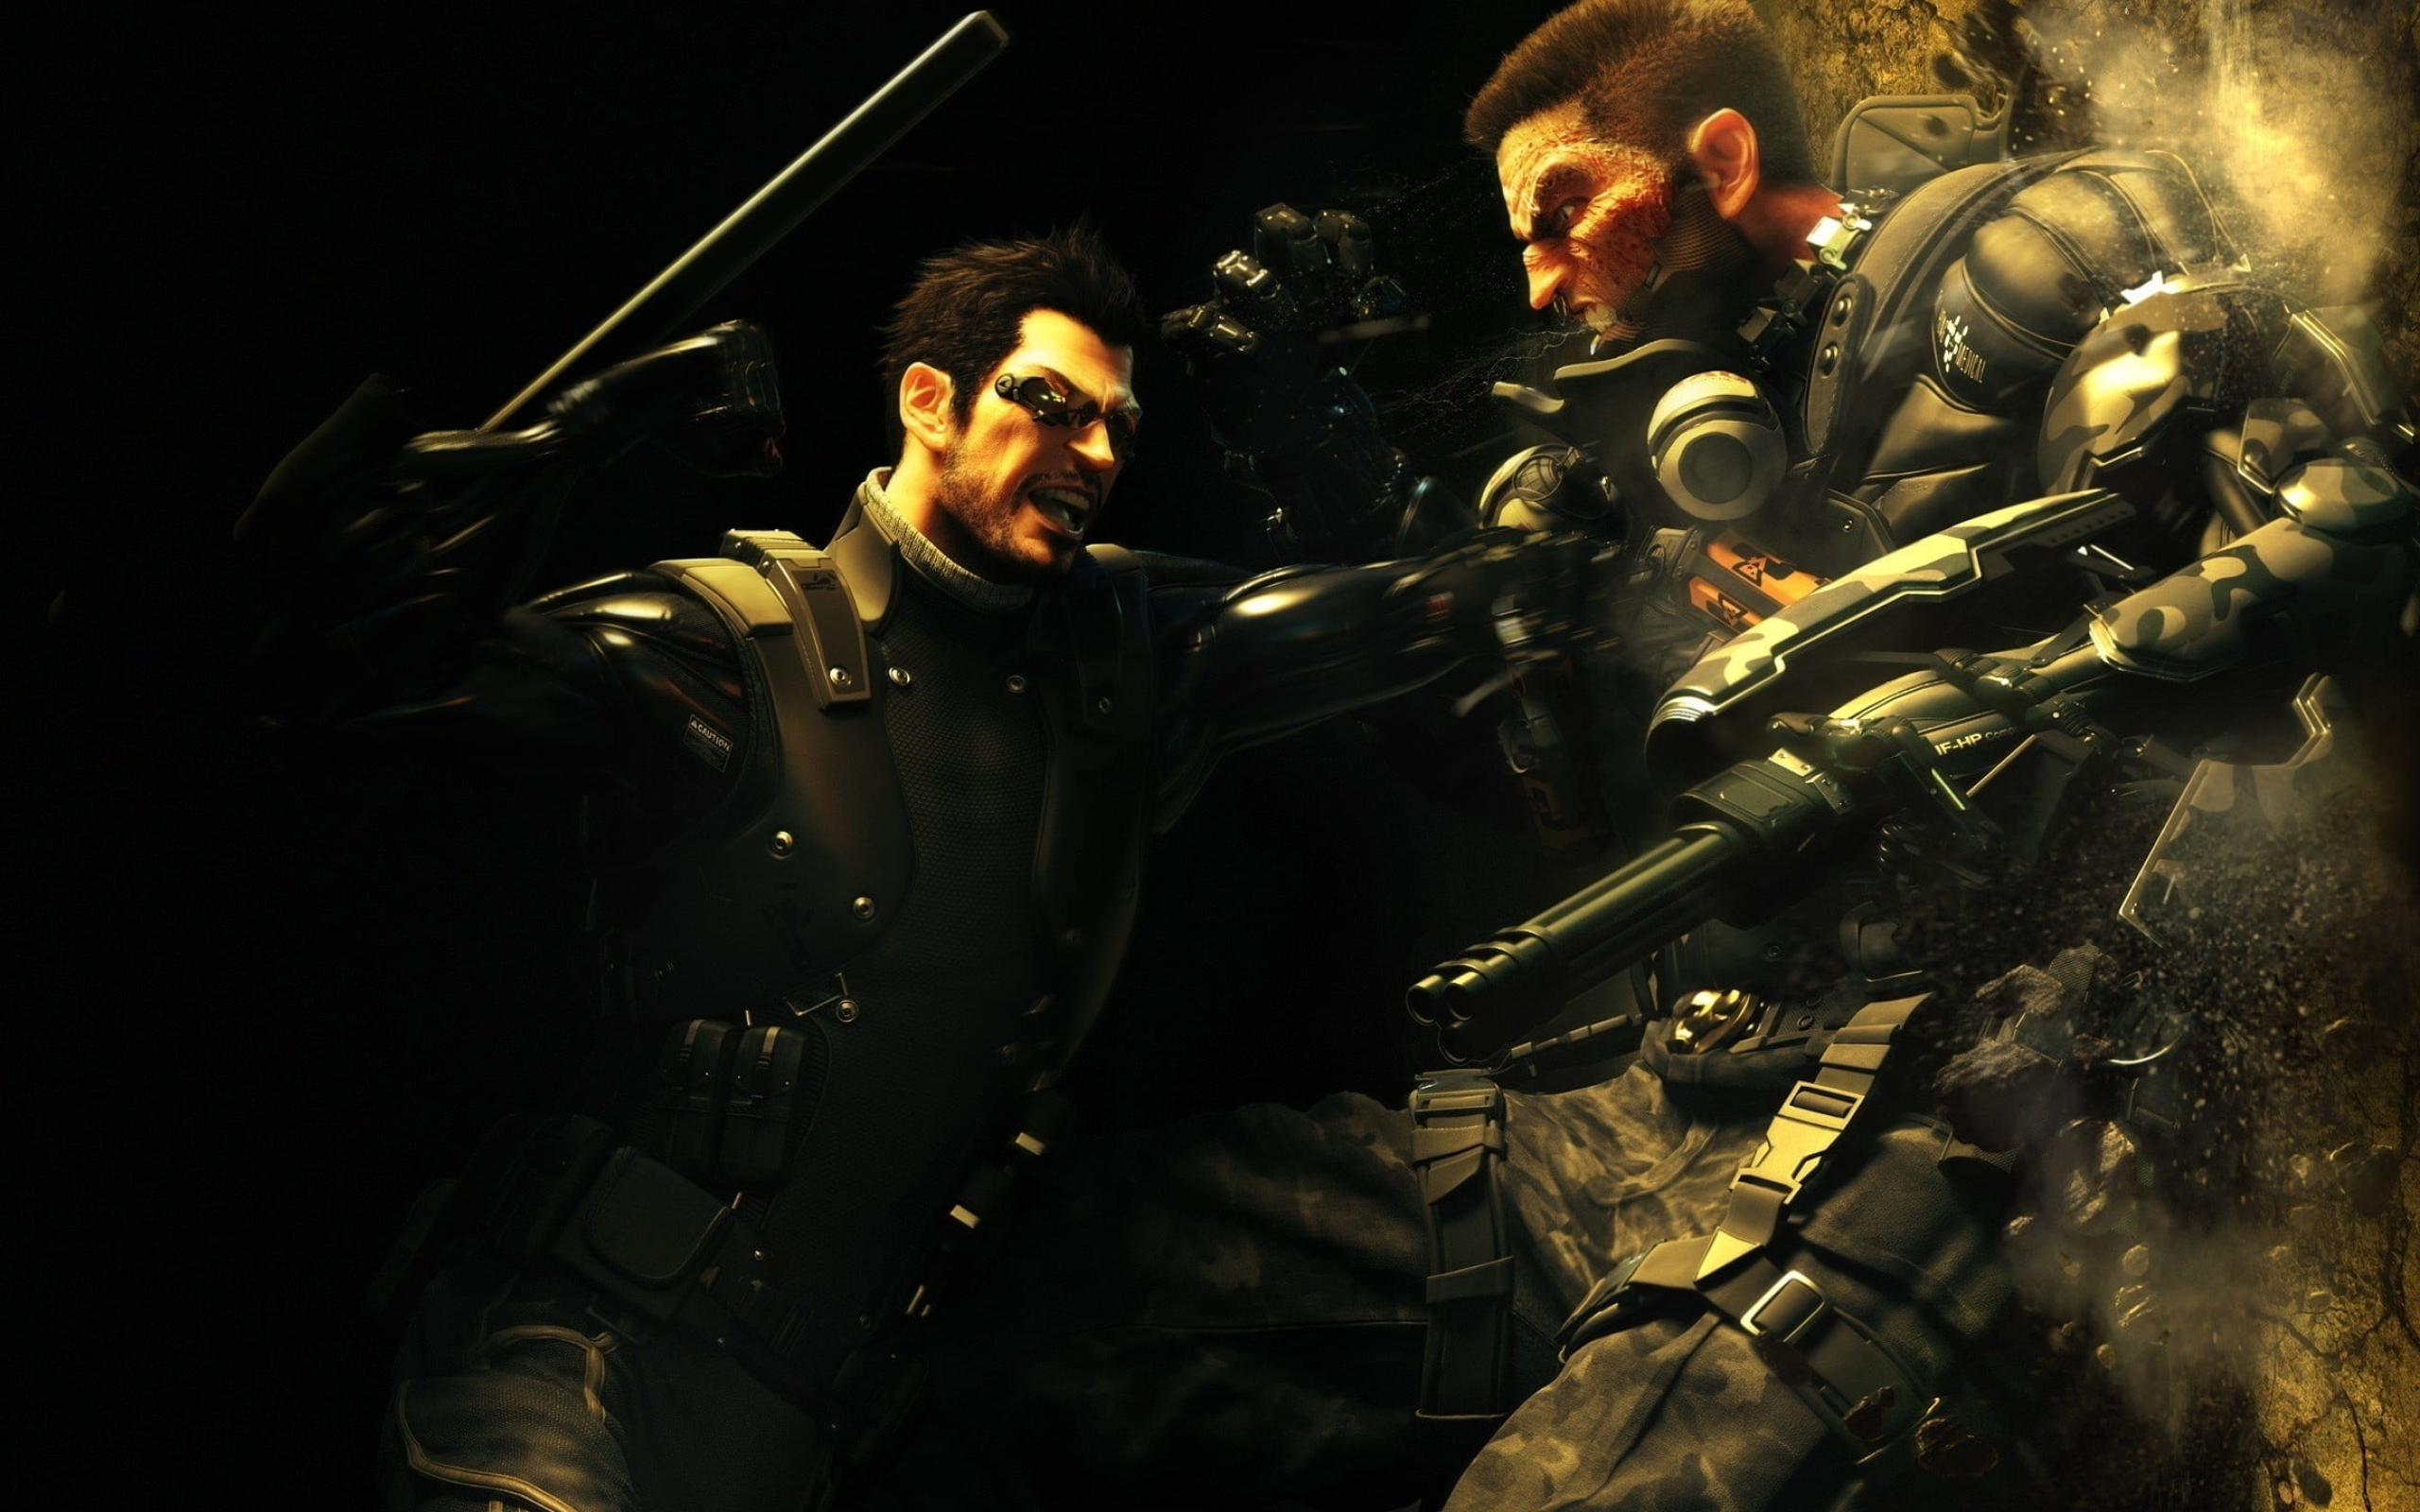 Black and yellow dragon action figure, Deus Ex: Human Revolution, video games HD wallpaper 2560x1600